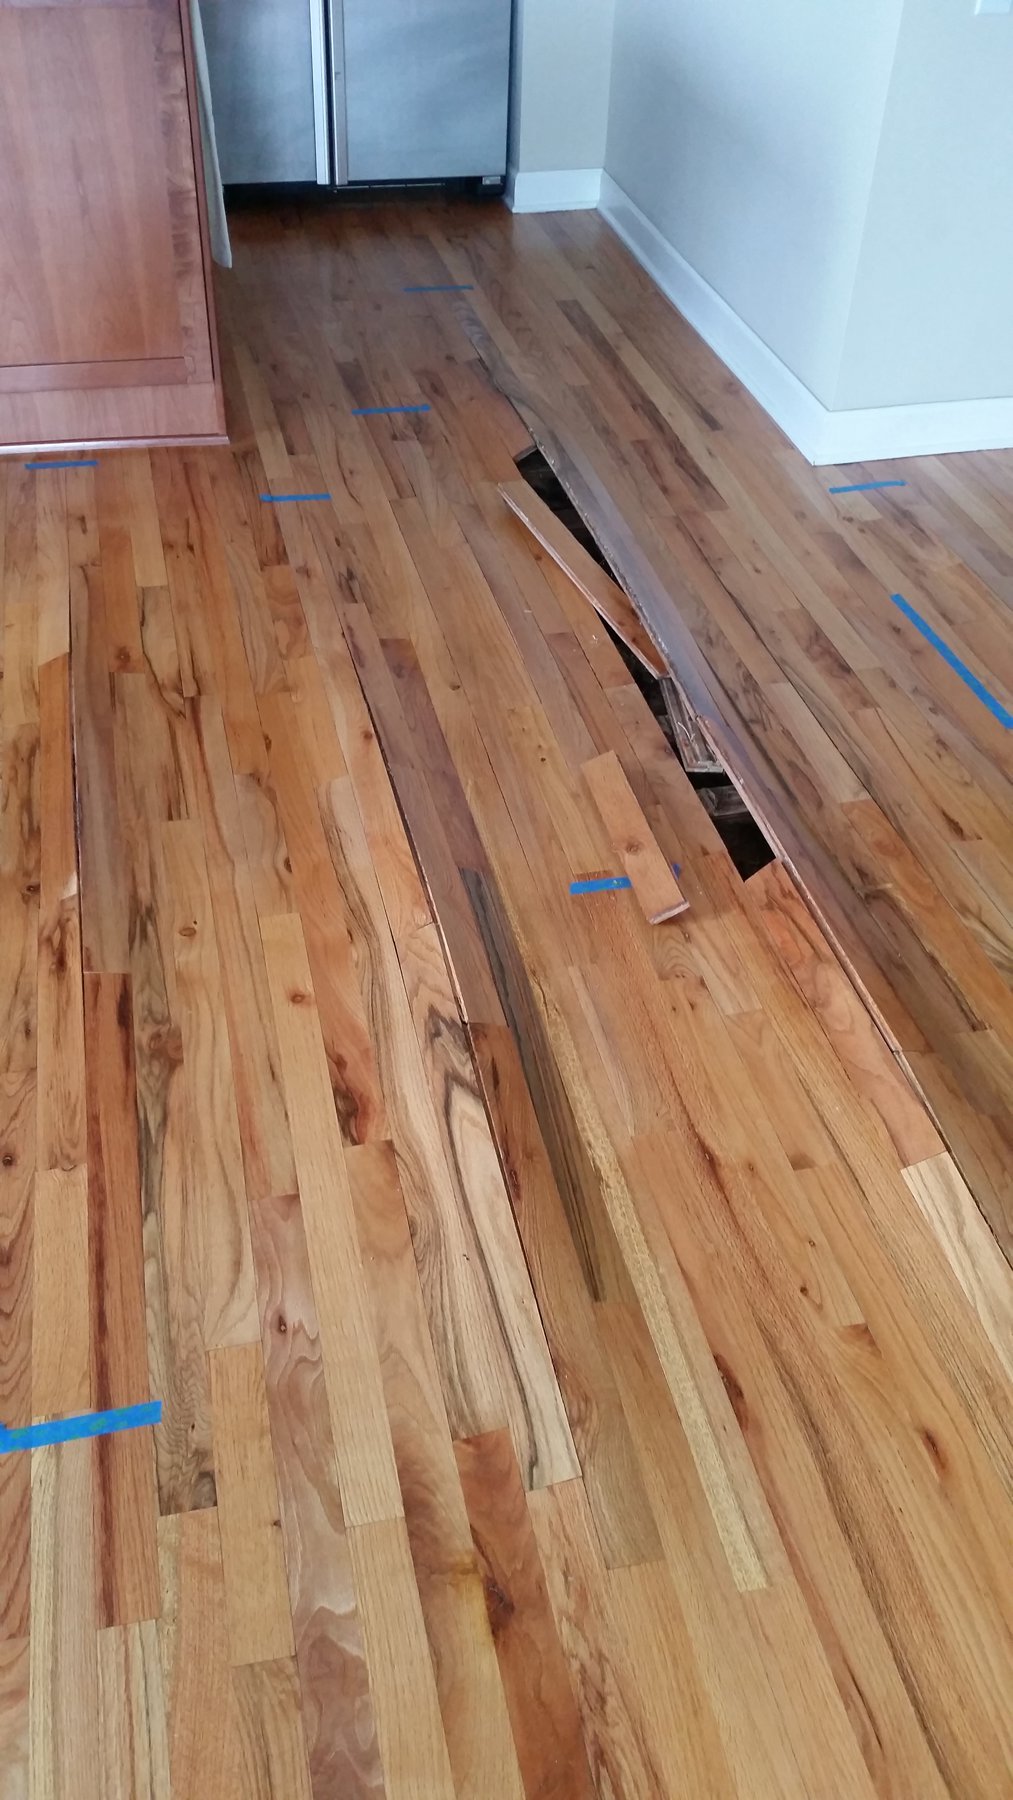 Repairing water damaged hardwood floors Mr. Floor Chicago